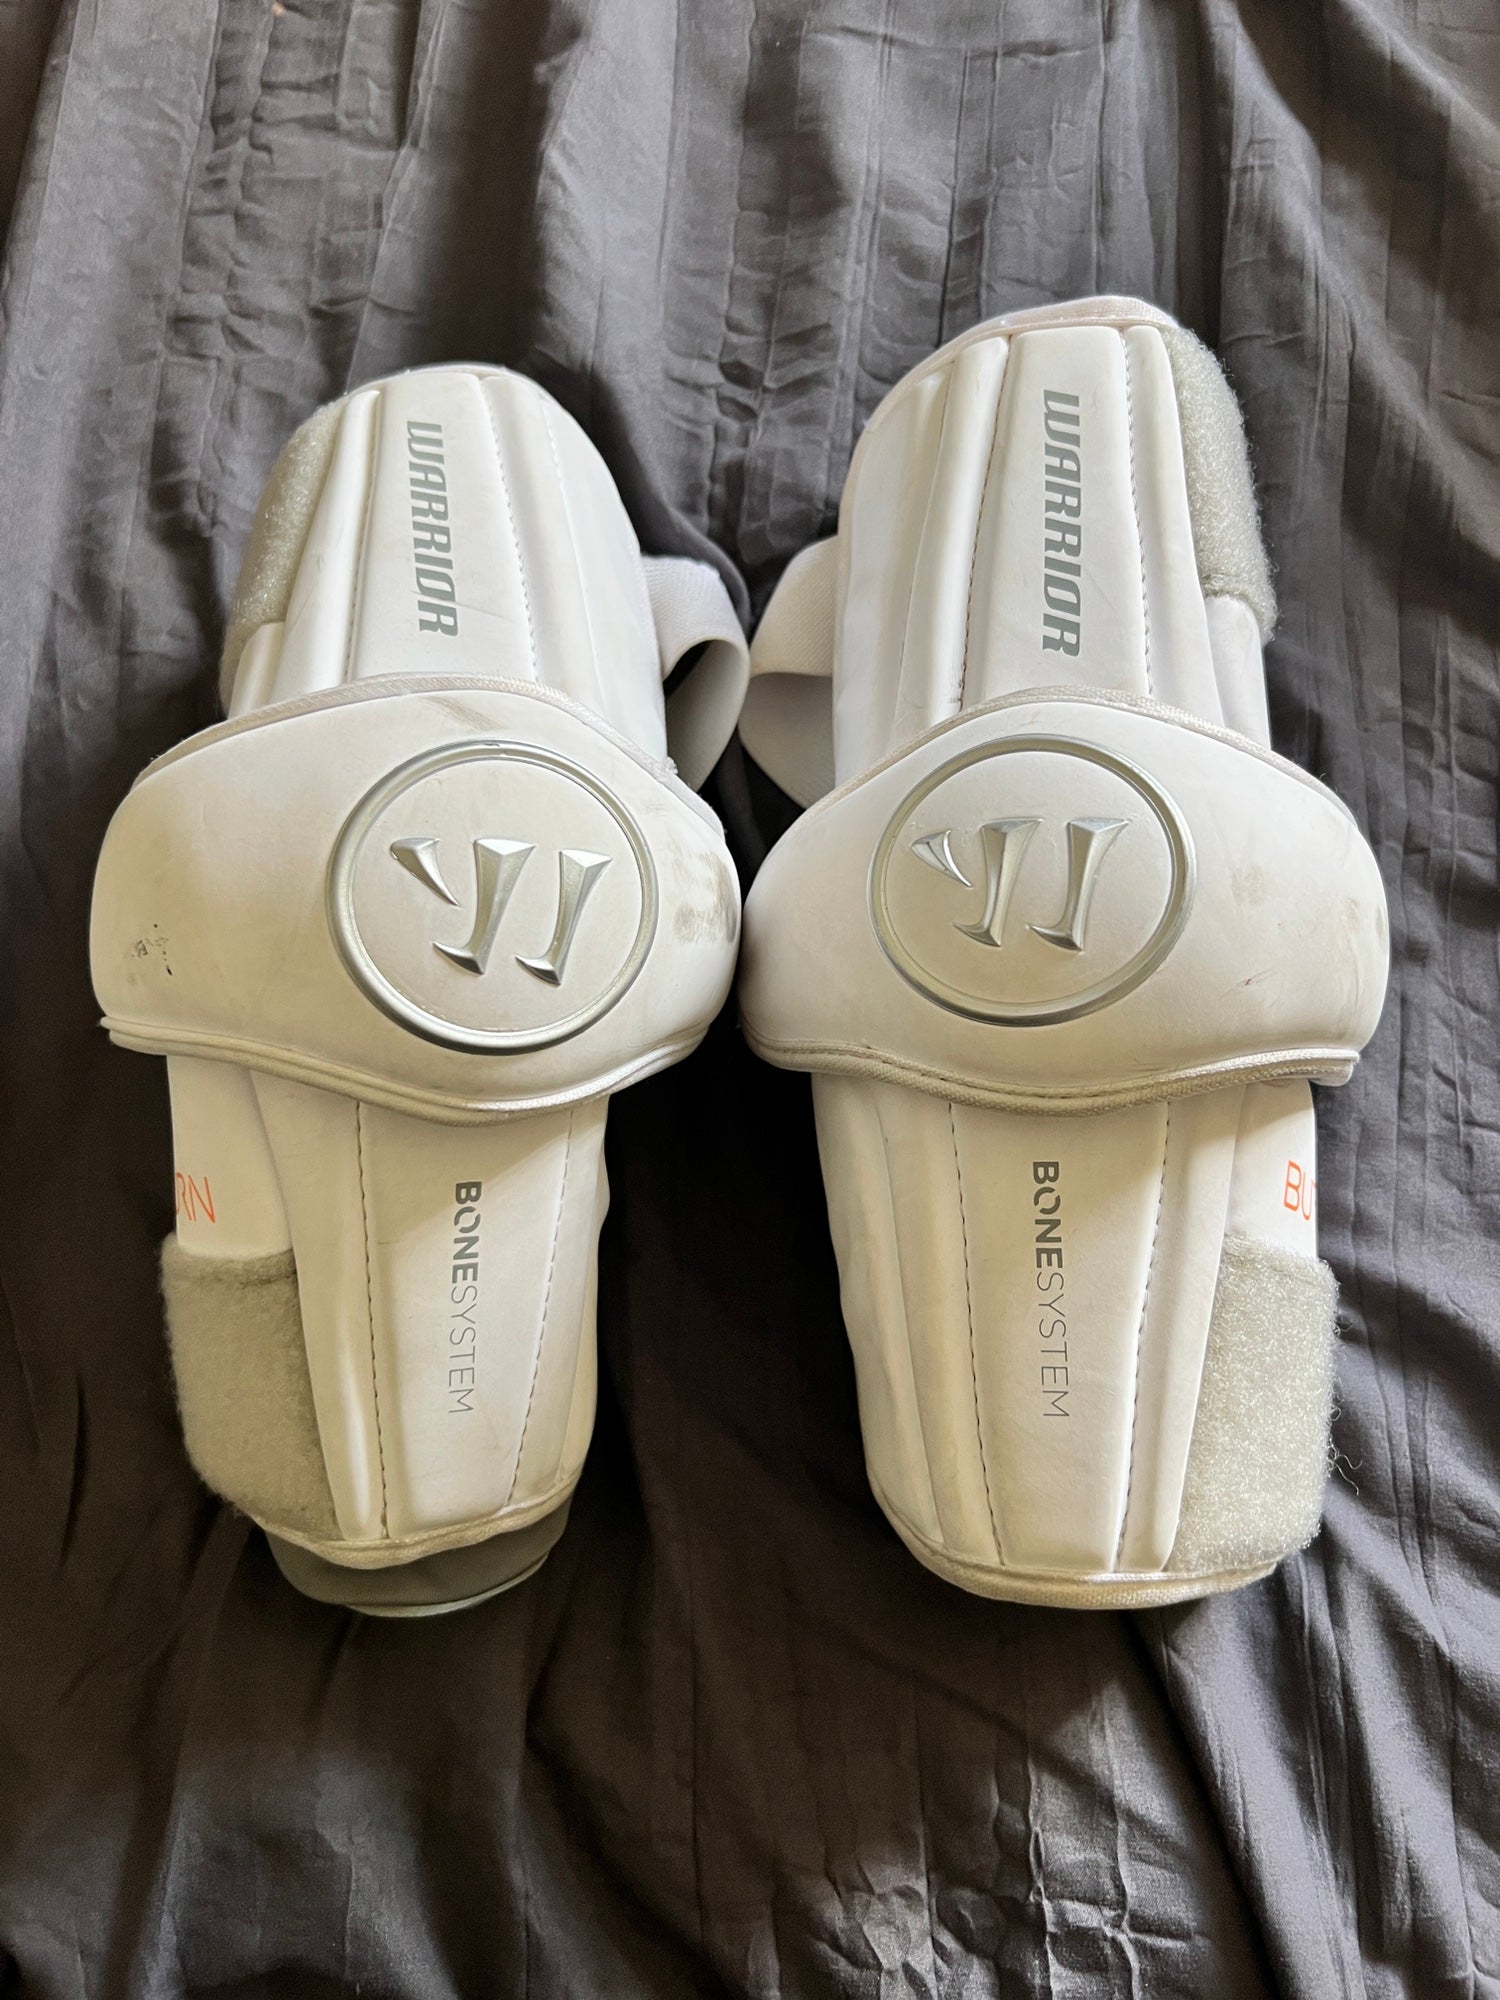 NY LIZARDS 2020 MLL Custom Warrior 13 Burn Pro Lacrosse Gloves